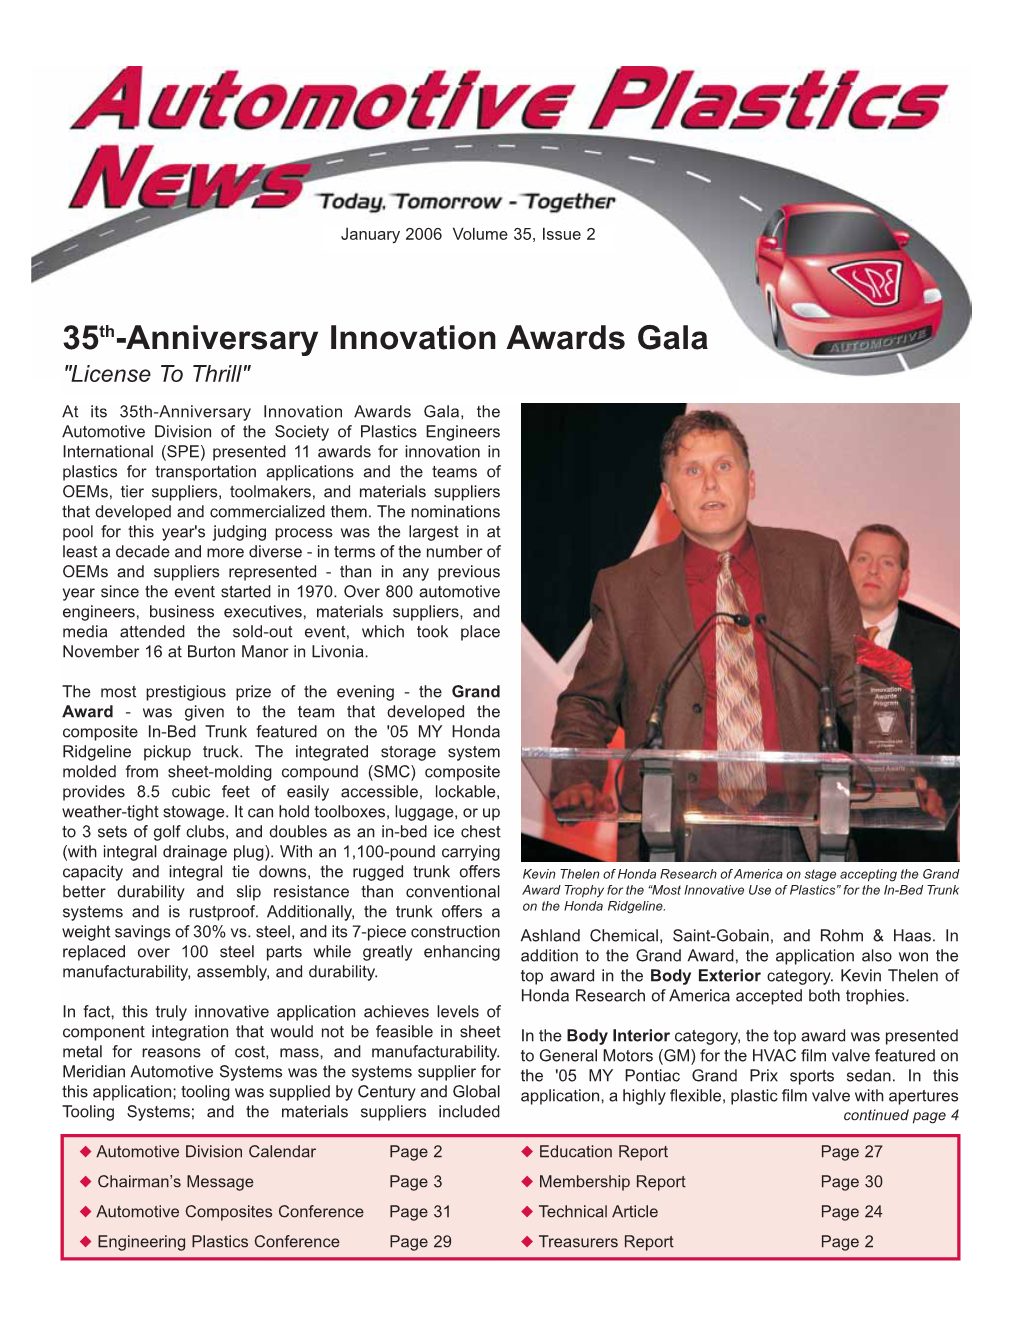 35Th-Anniversary Innovation Awards Gala "License to Thrill"